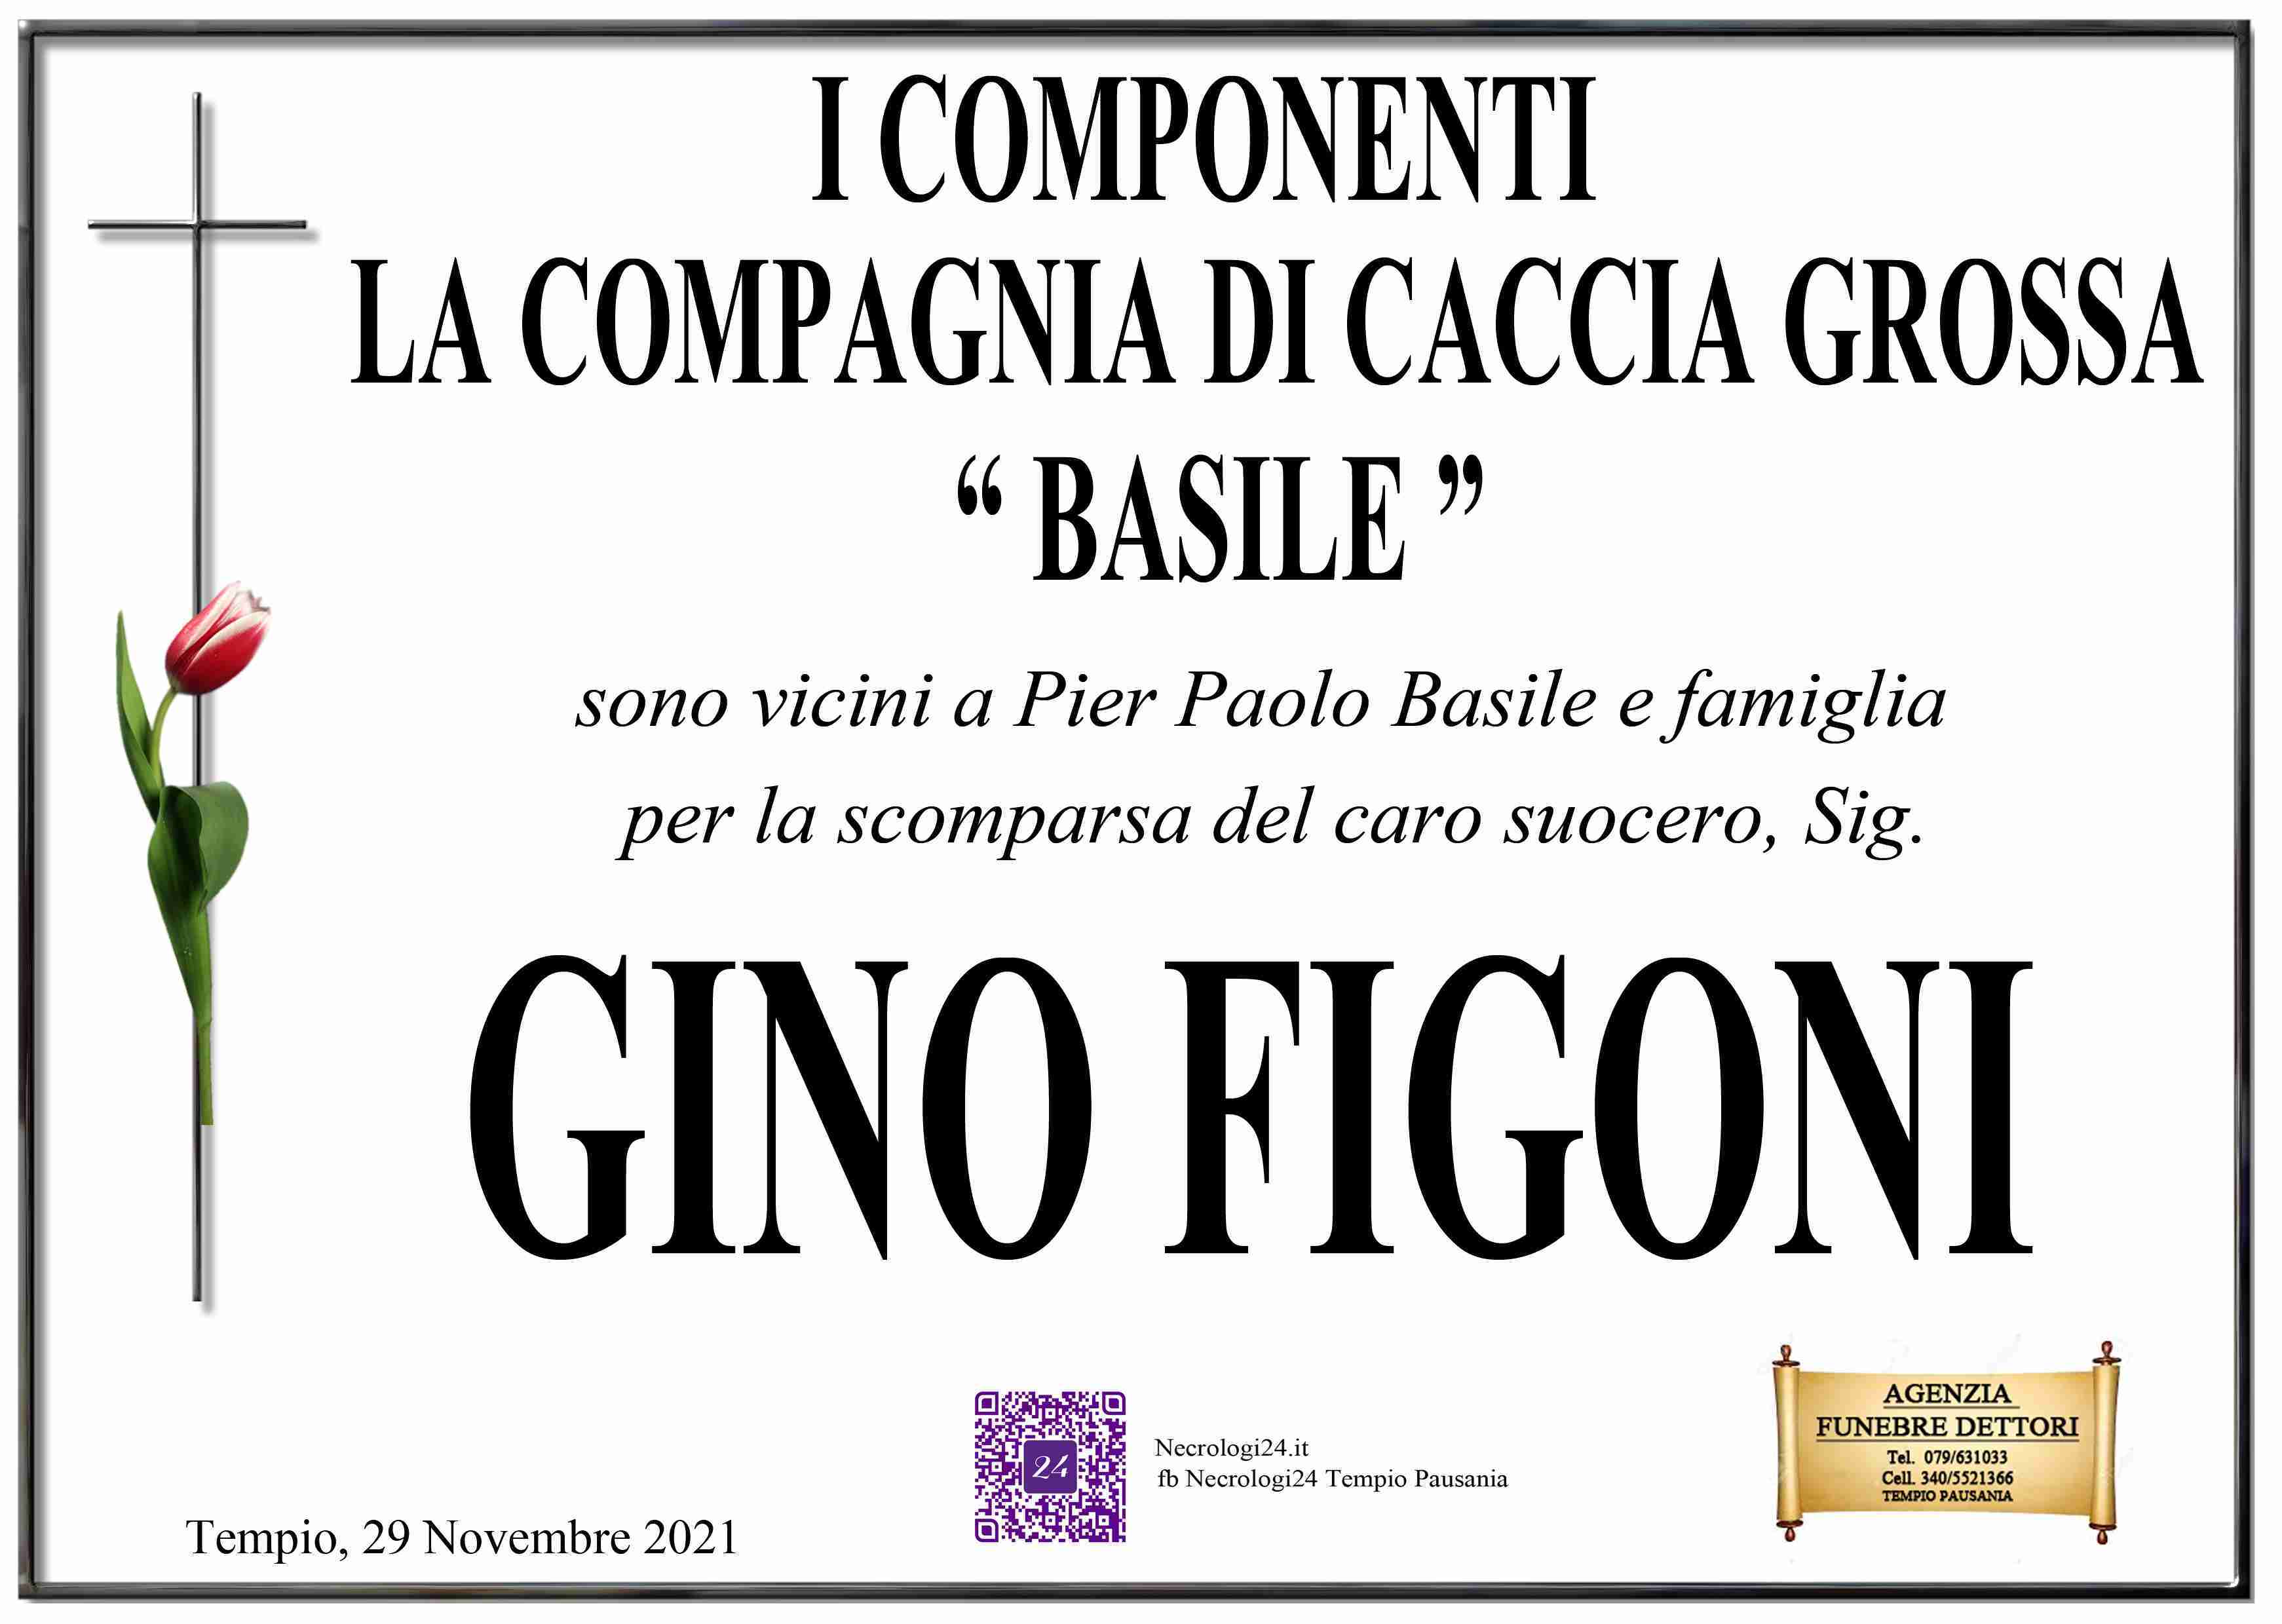 Gino Figoni